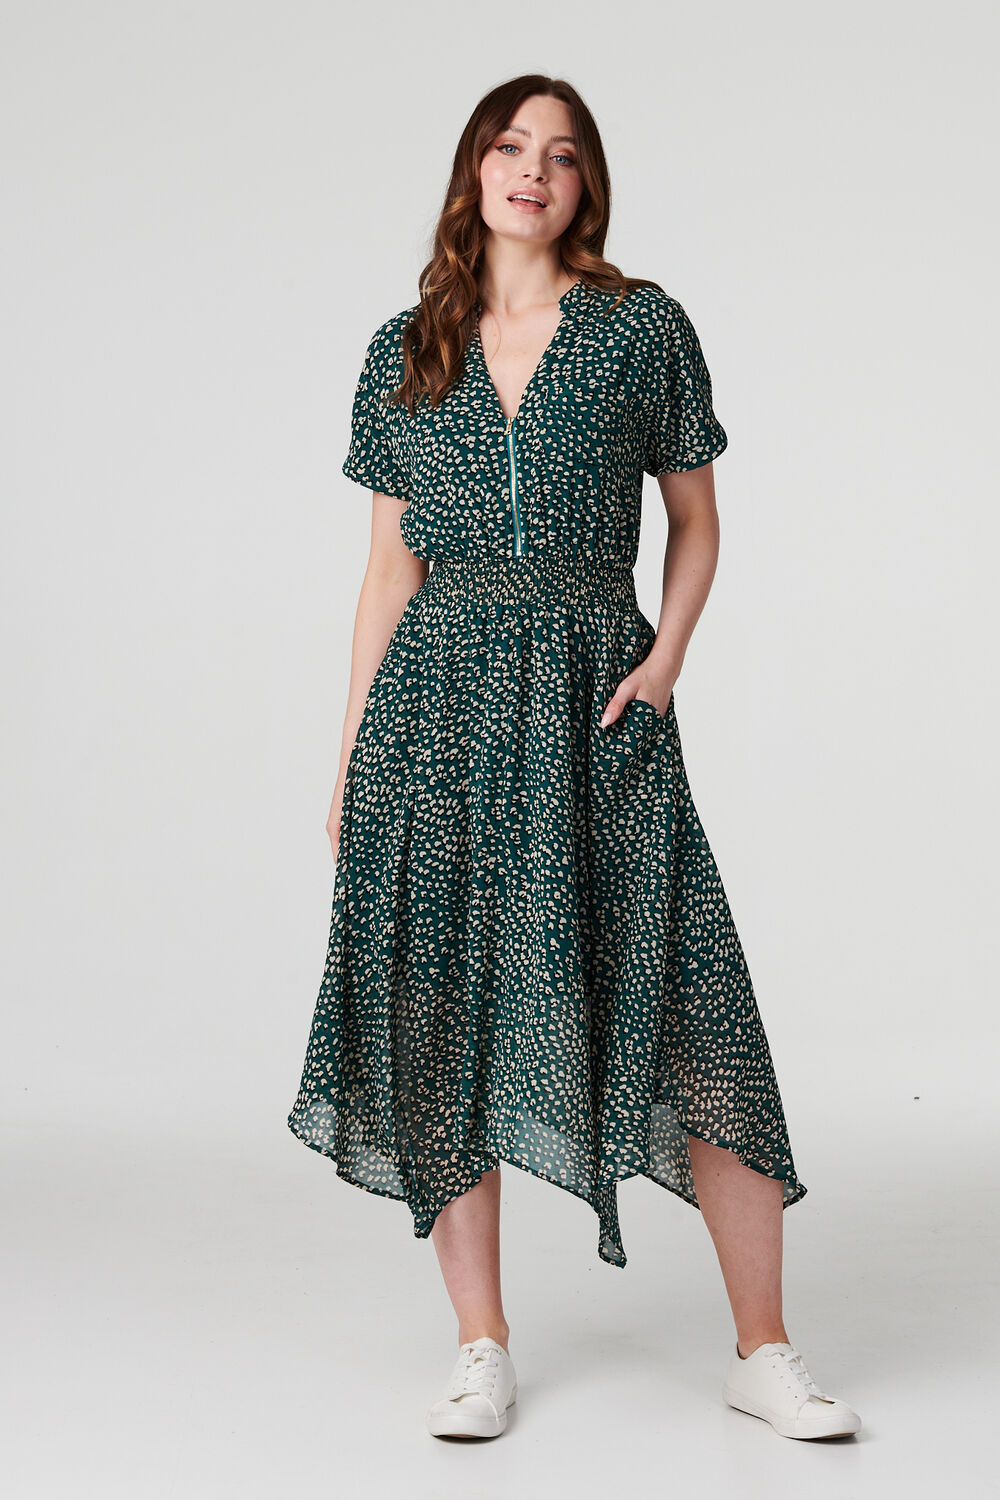 Izabel London Green - Printed Zip Front Hanky Hem Dress, Size: 14